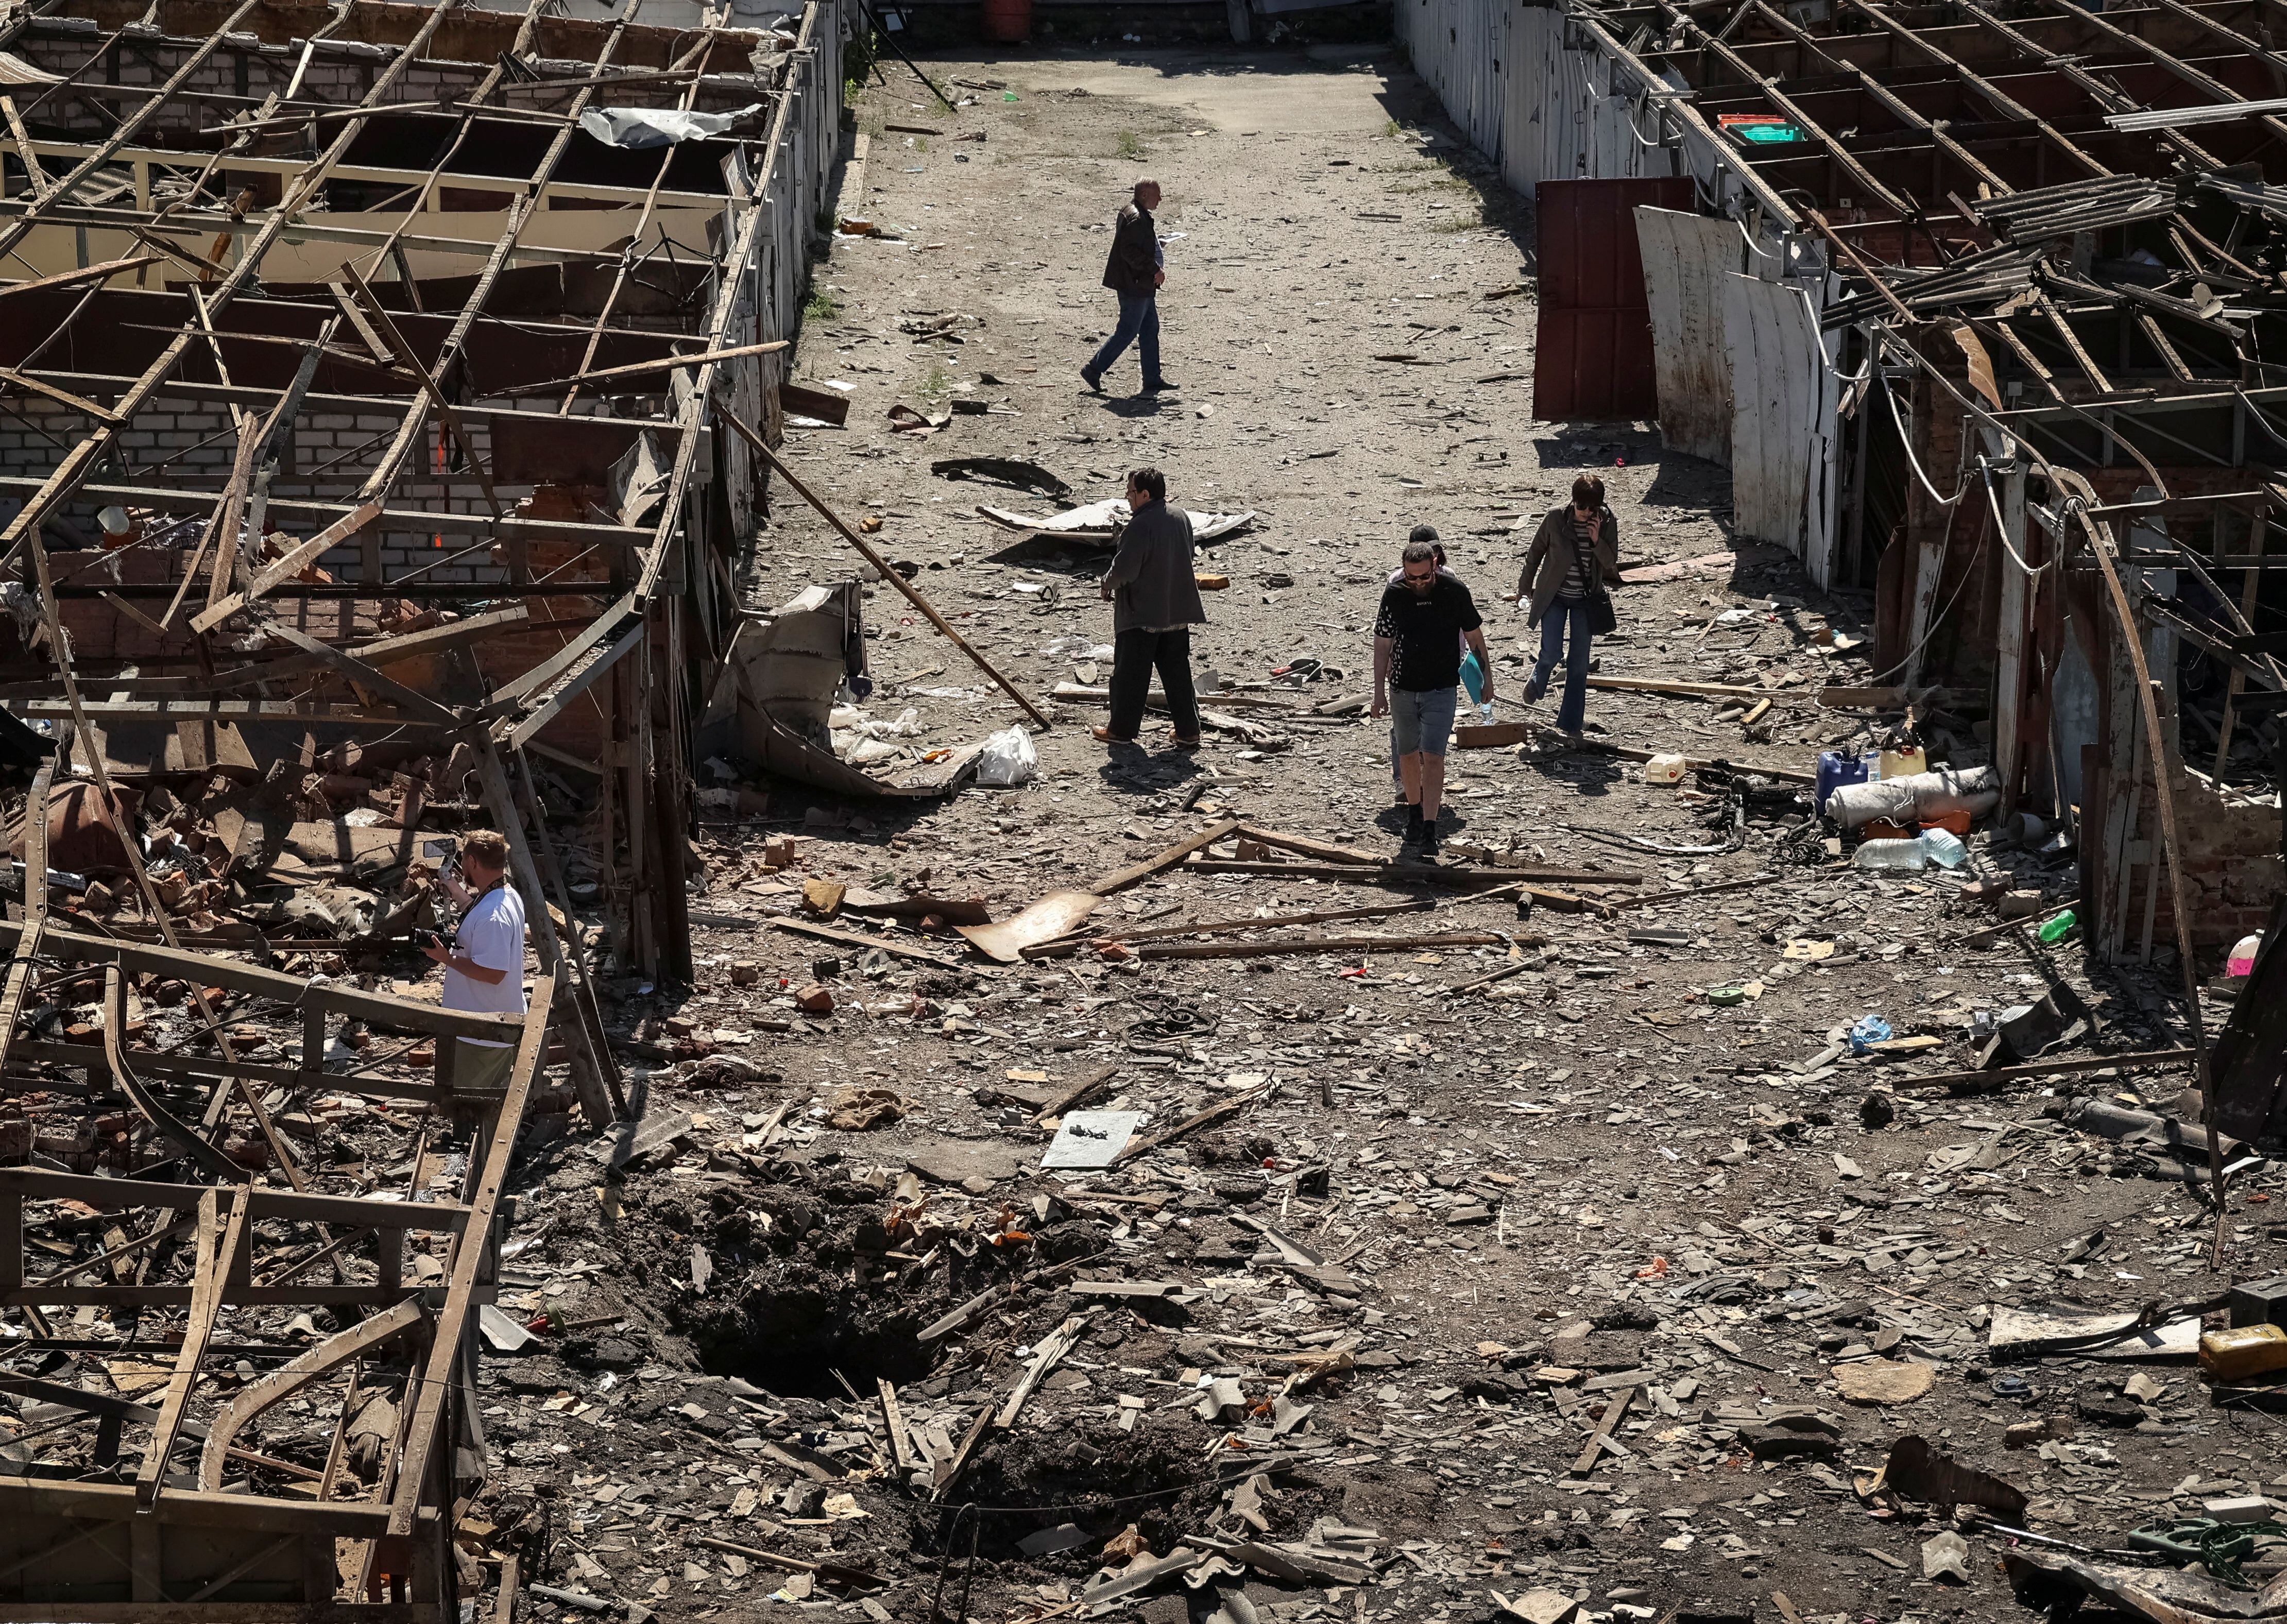 Los ataques causaron graves daños contra la infraestructura civil (REUTERS/Sofiia Gatilova)